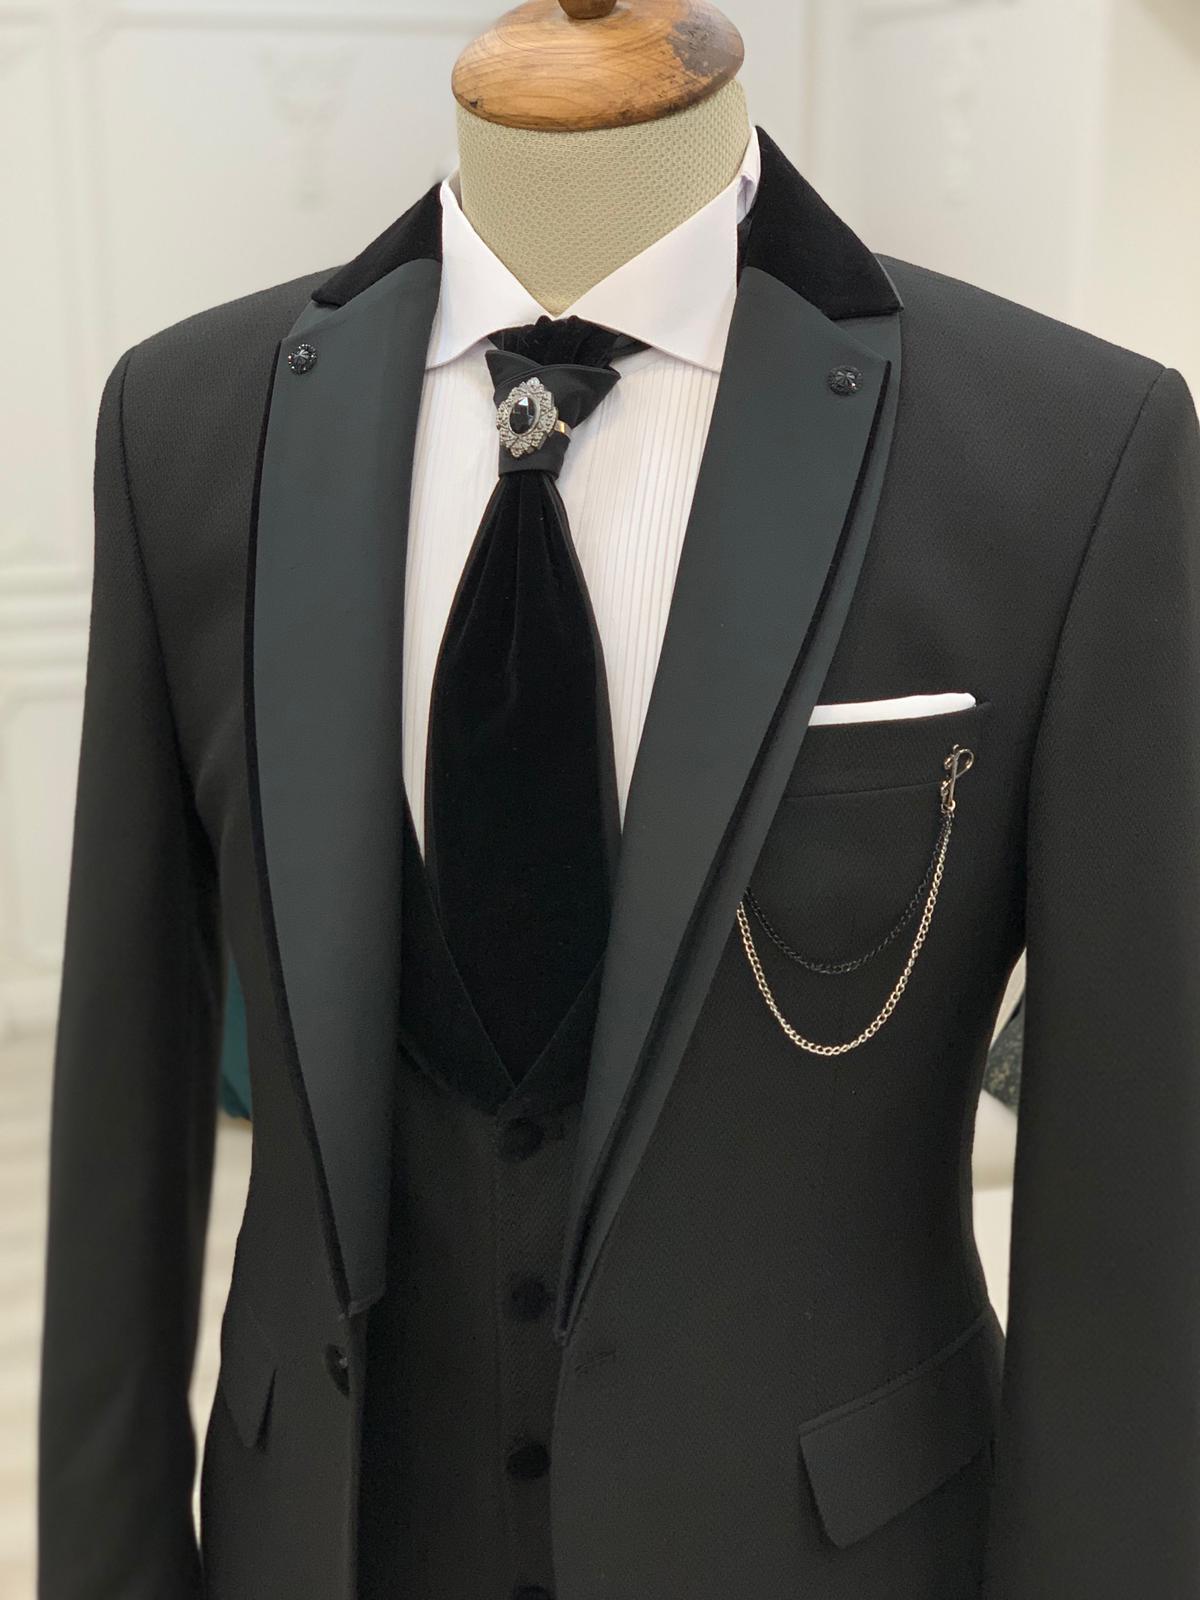 Black Slim Fit Notch Lapel Wedding Suit by GentWith.com